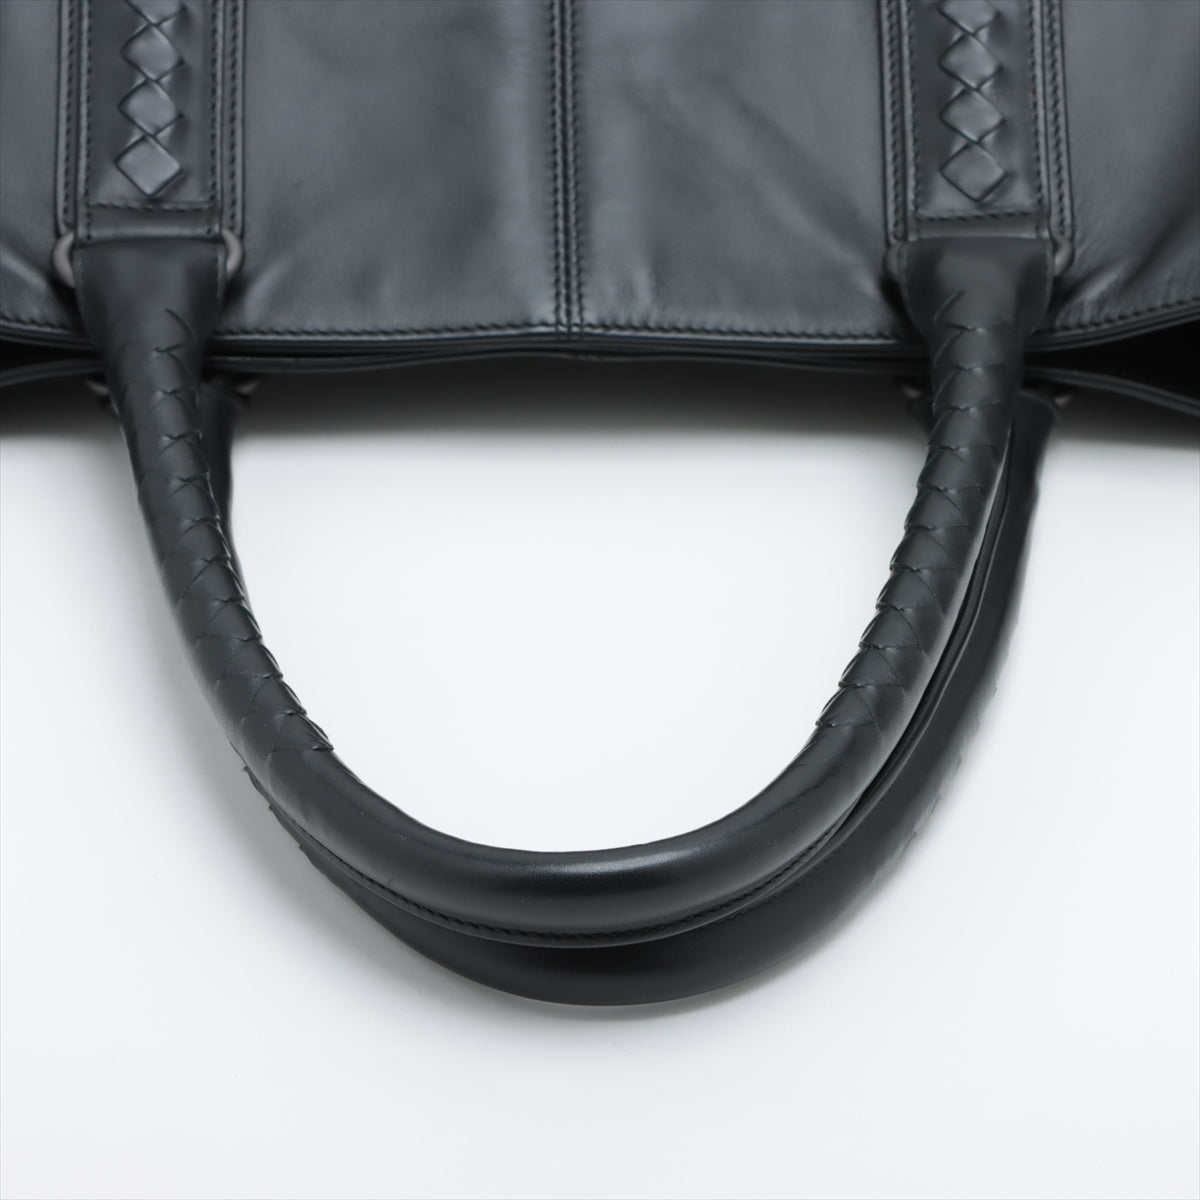 Bottega Veneta Leather Tote bag Black